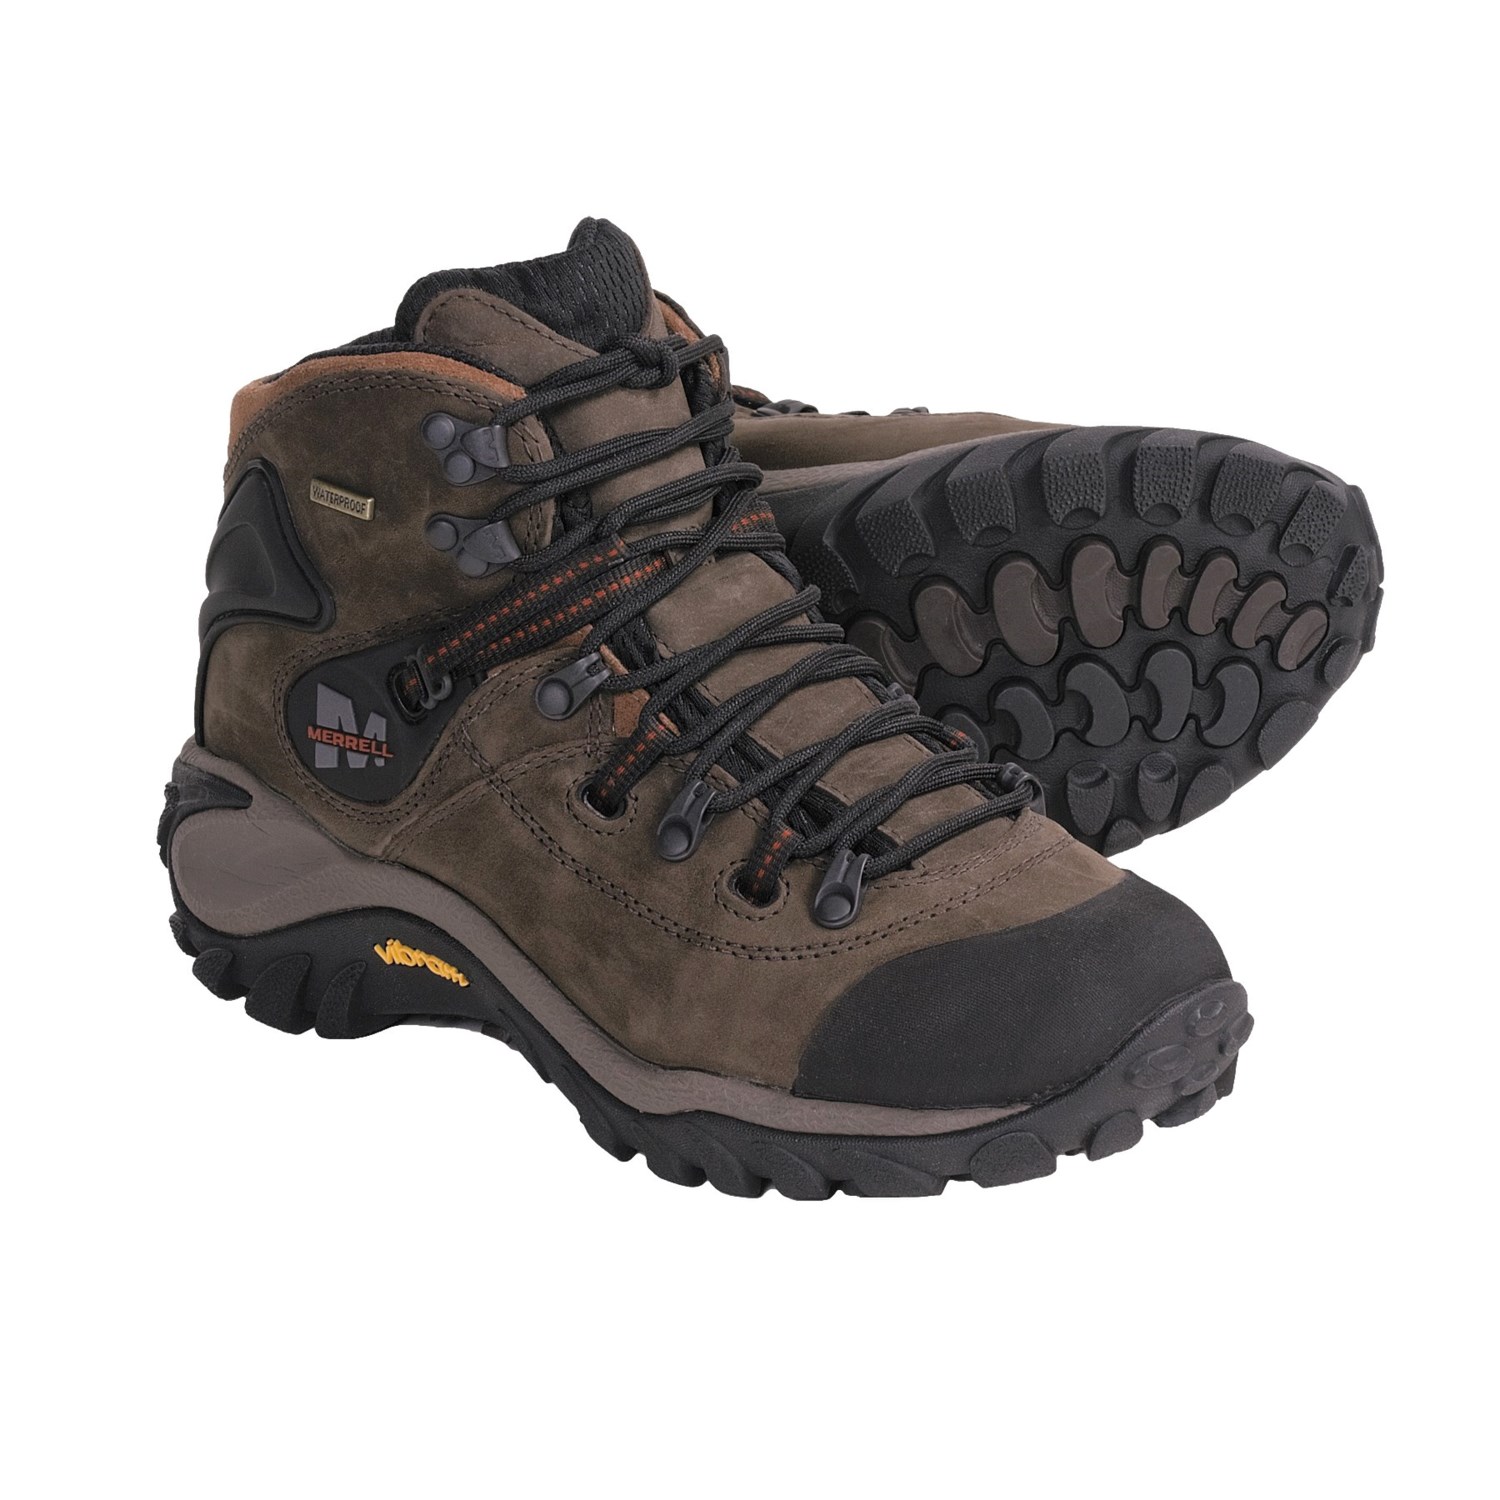 Merrell Phaser Peak Hiking Boots (For Women) 3461C - Save 30%